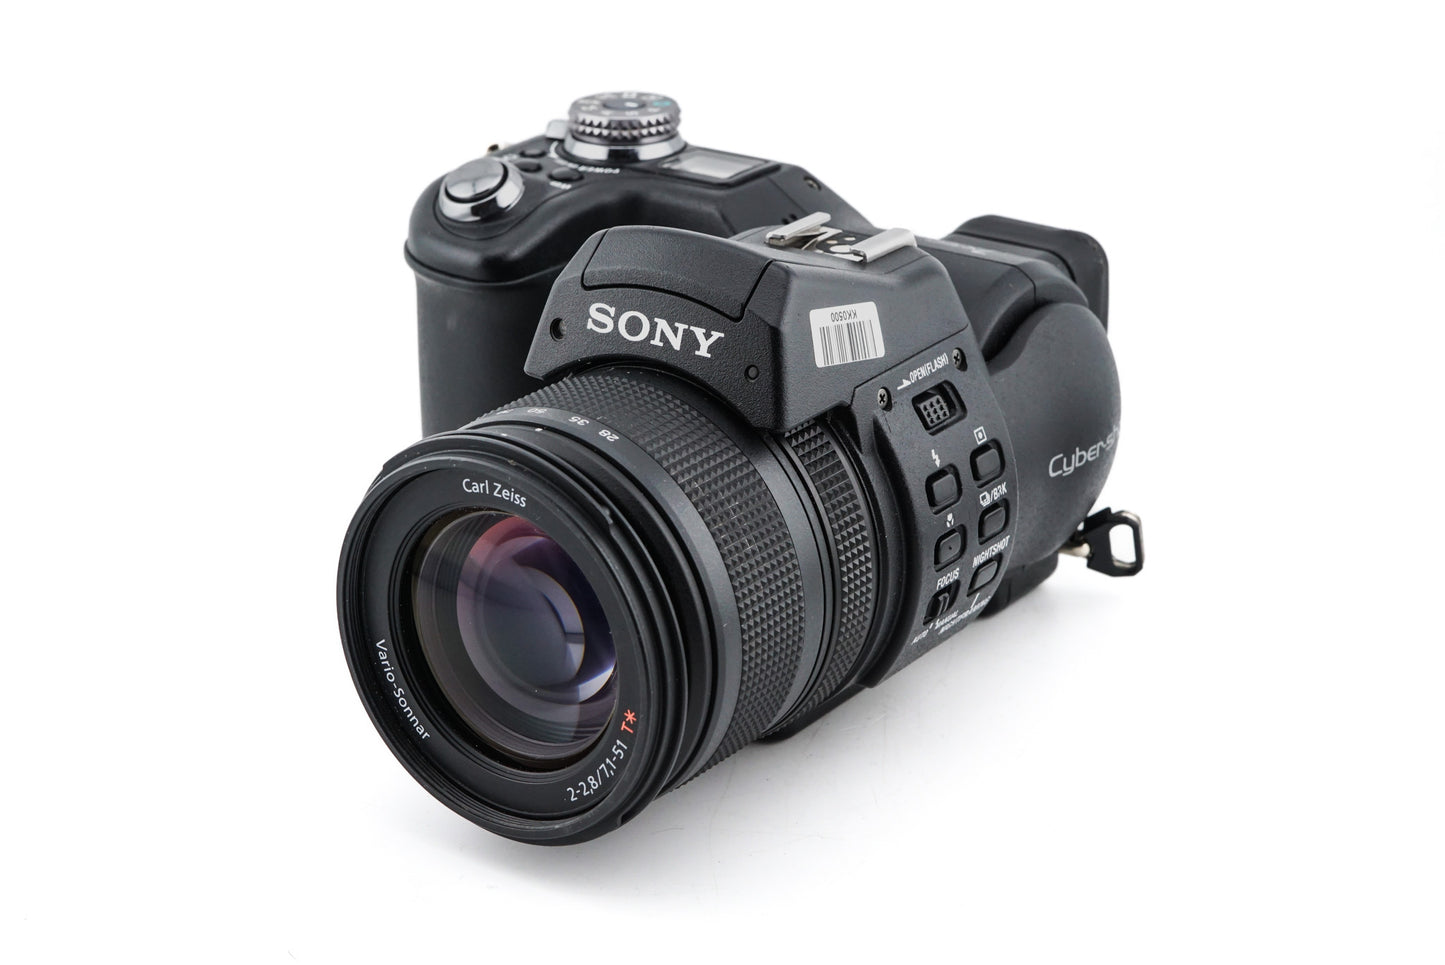 Sony DSC-F828 - Camera